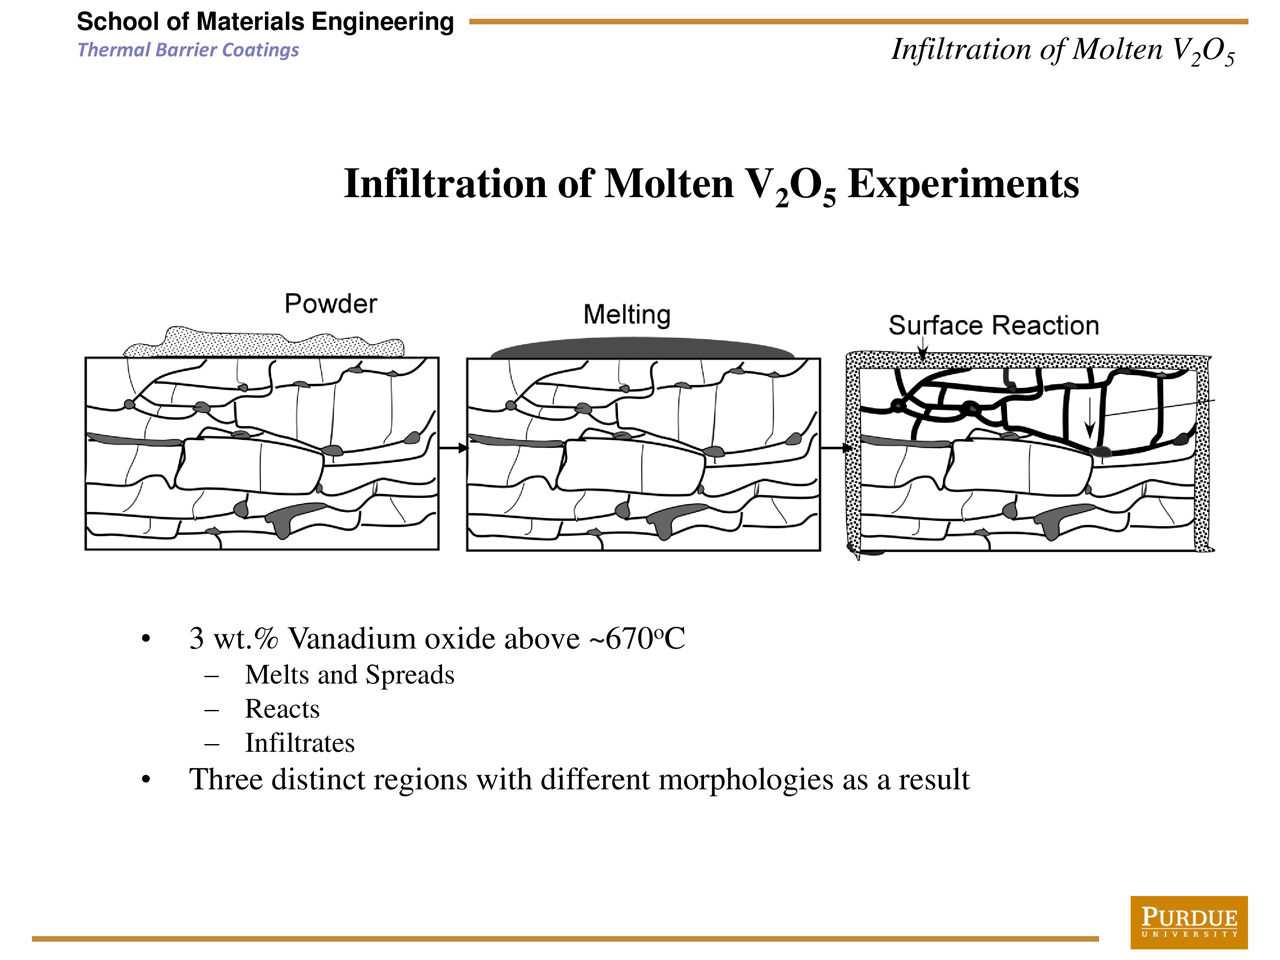 Infiltration of Molten V2O5 Experiments